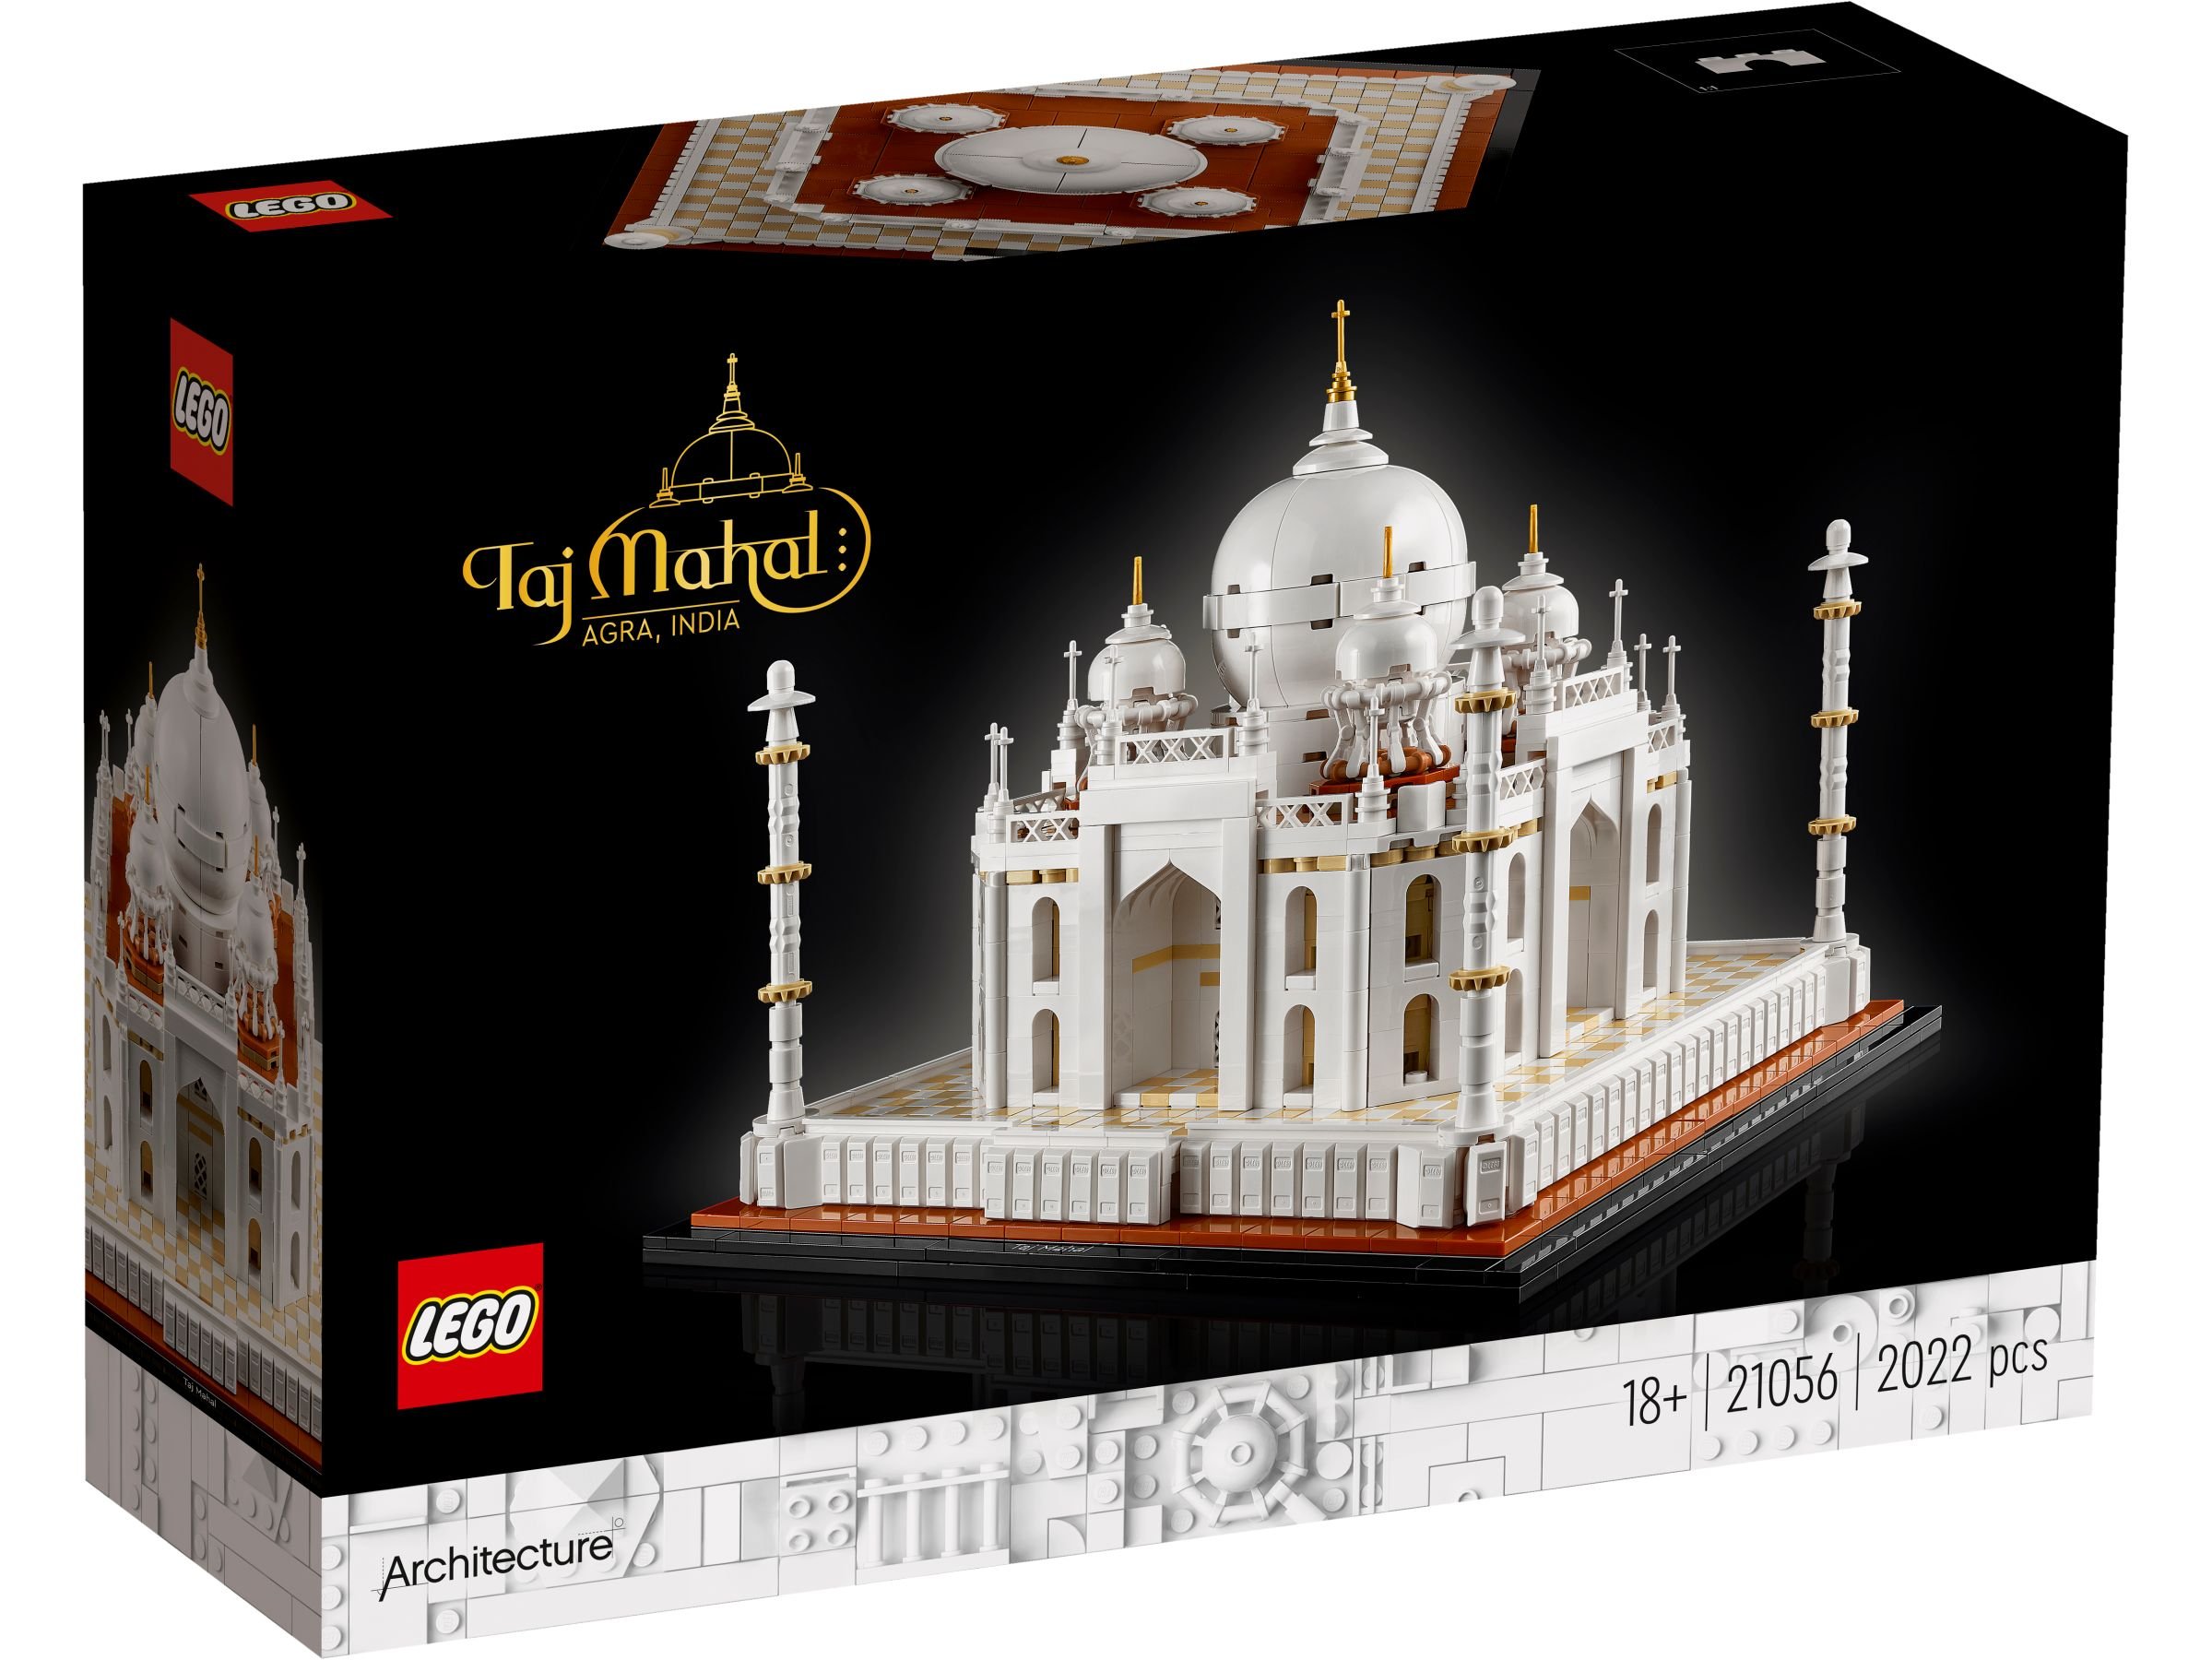 LEGO Architecture 21056 Taj Mahal LEGO_21056_box1_v29.jpg